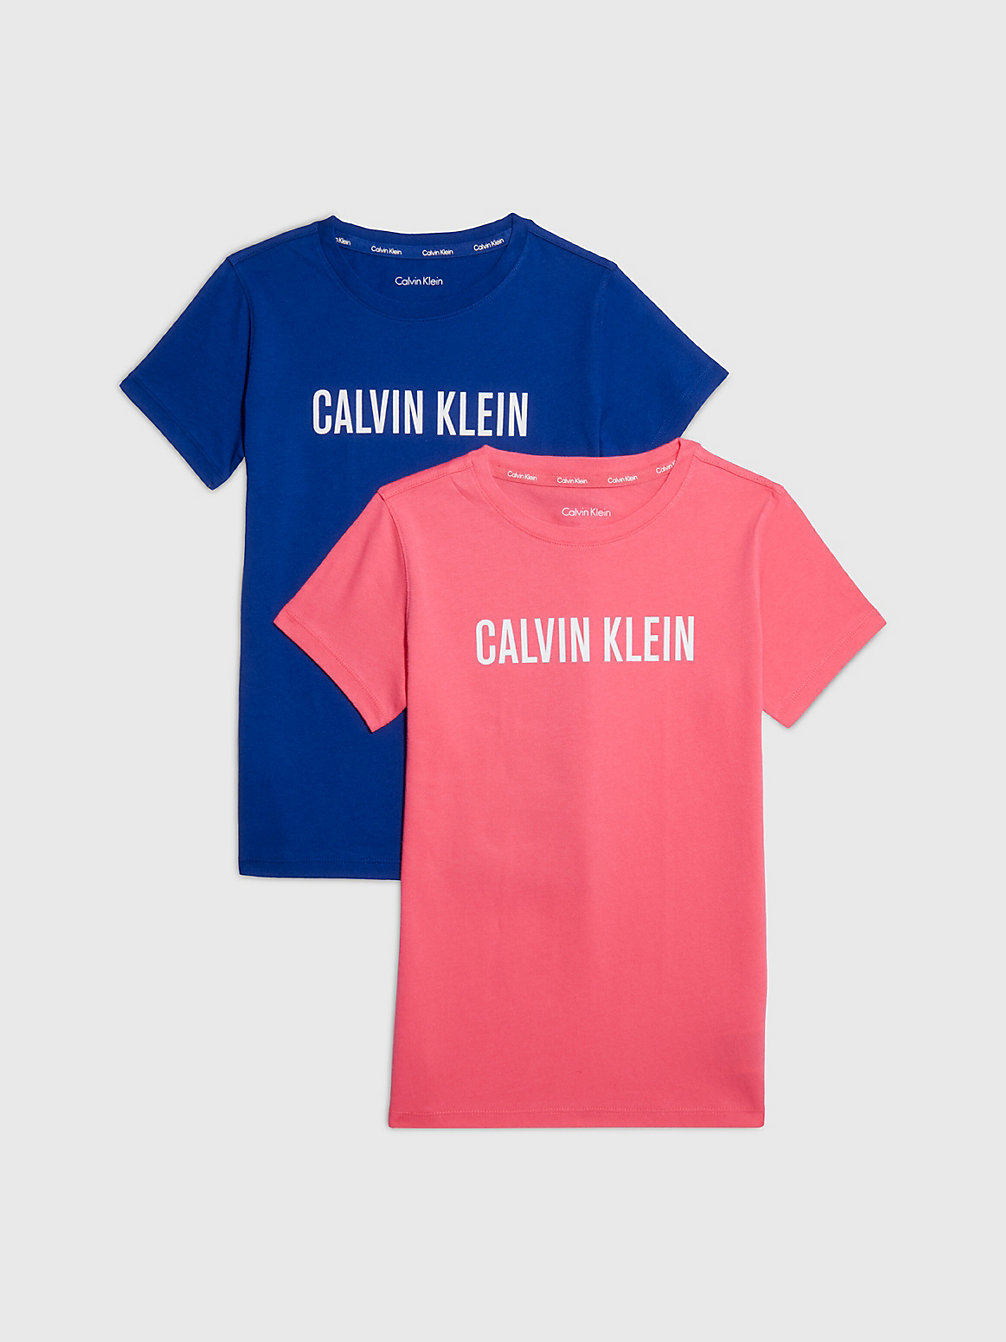 T-Shirt In Confezione Da 2 - Intense Power > PINKFLASH/BOLDBLUE > undefined bambina > Calvin Klein